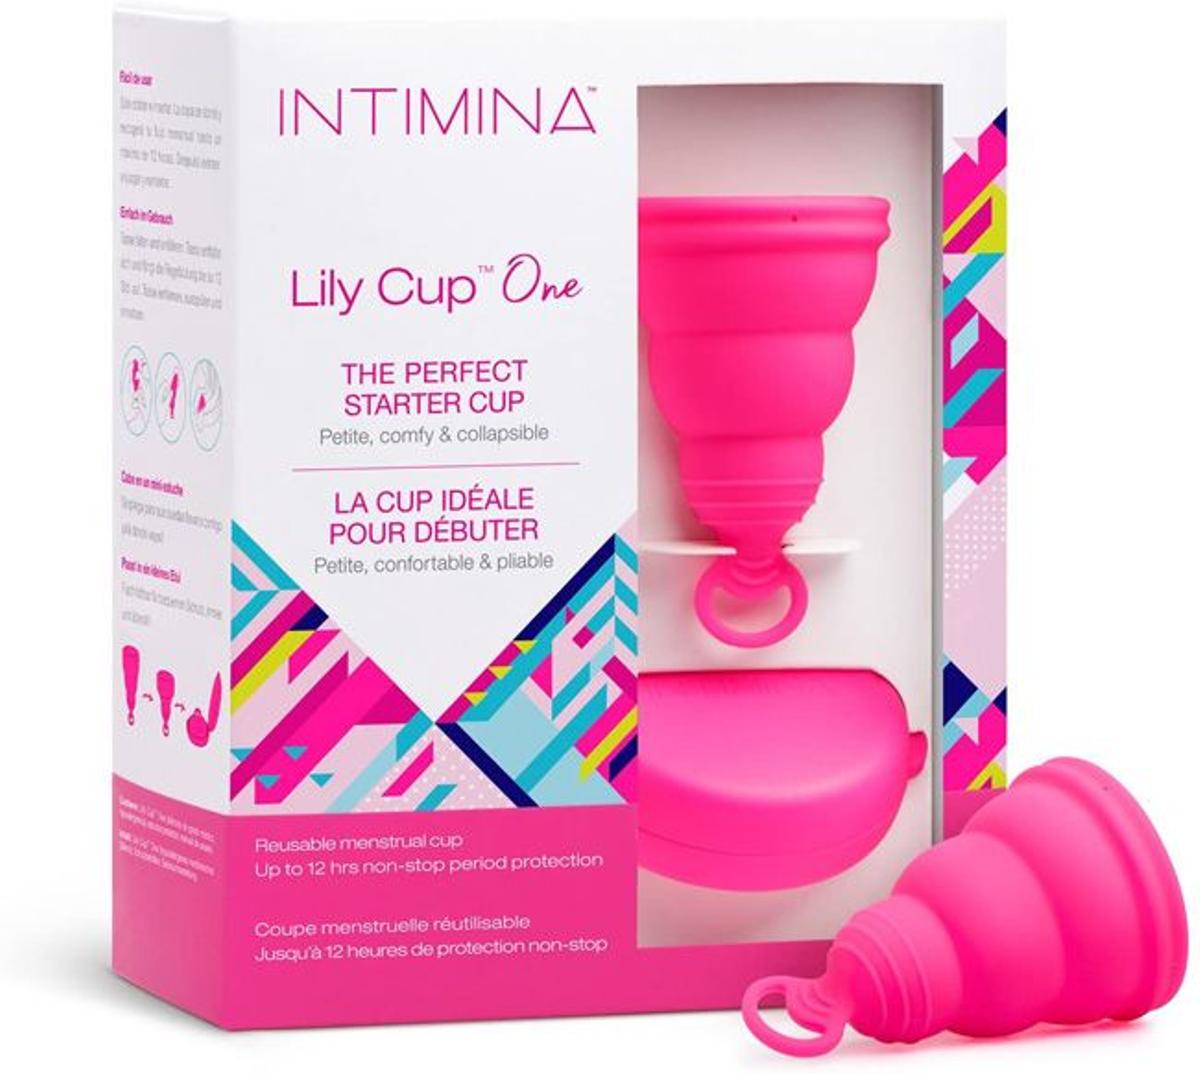 Copa menstrual Lily Cup One, de Intimina